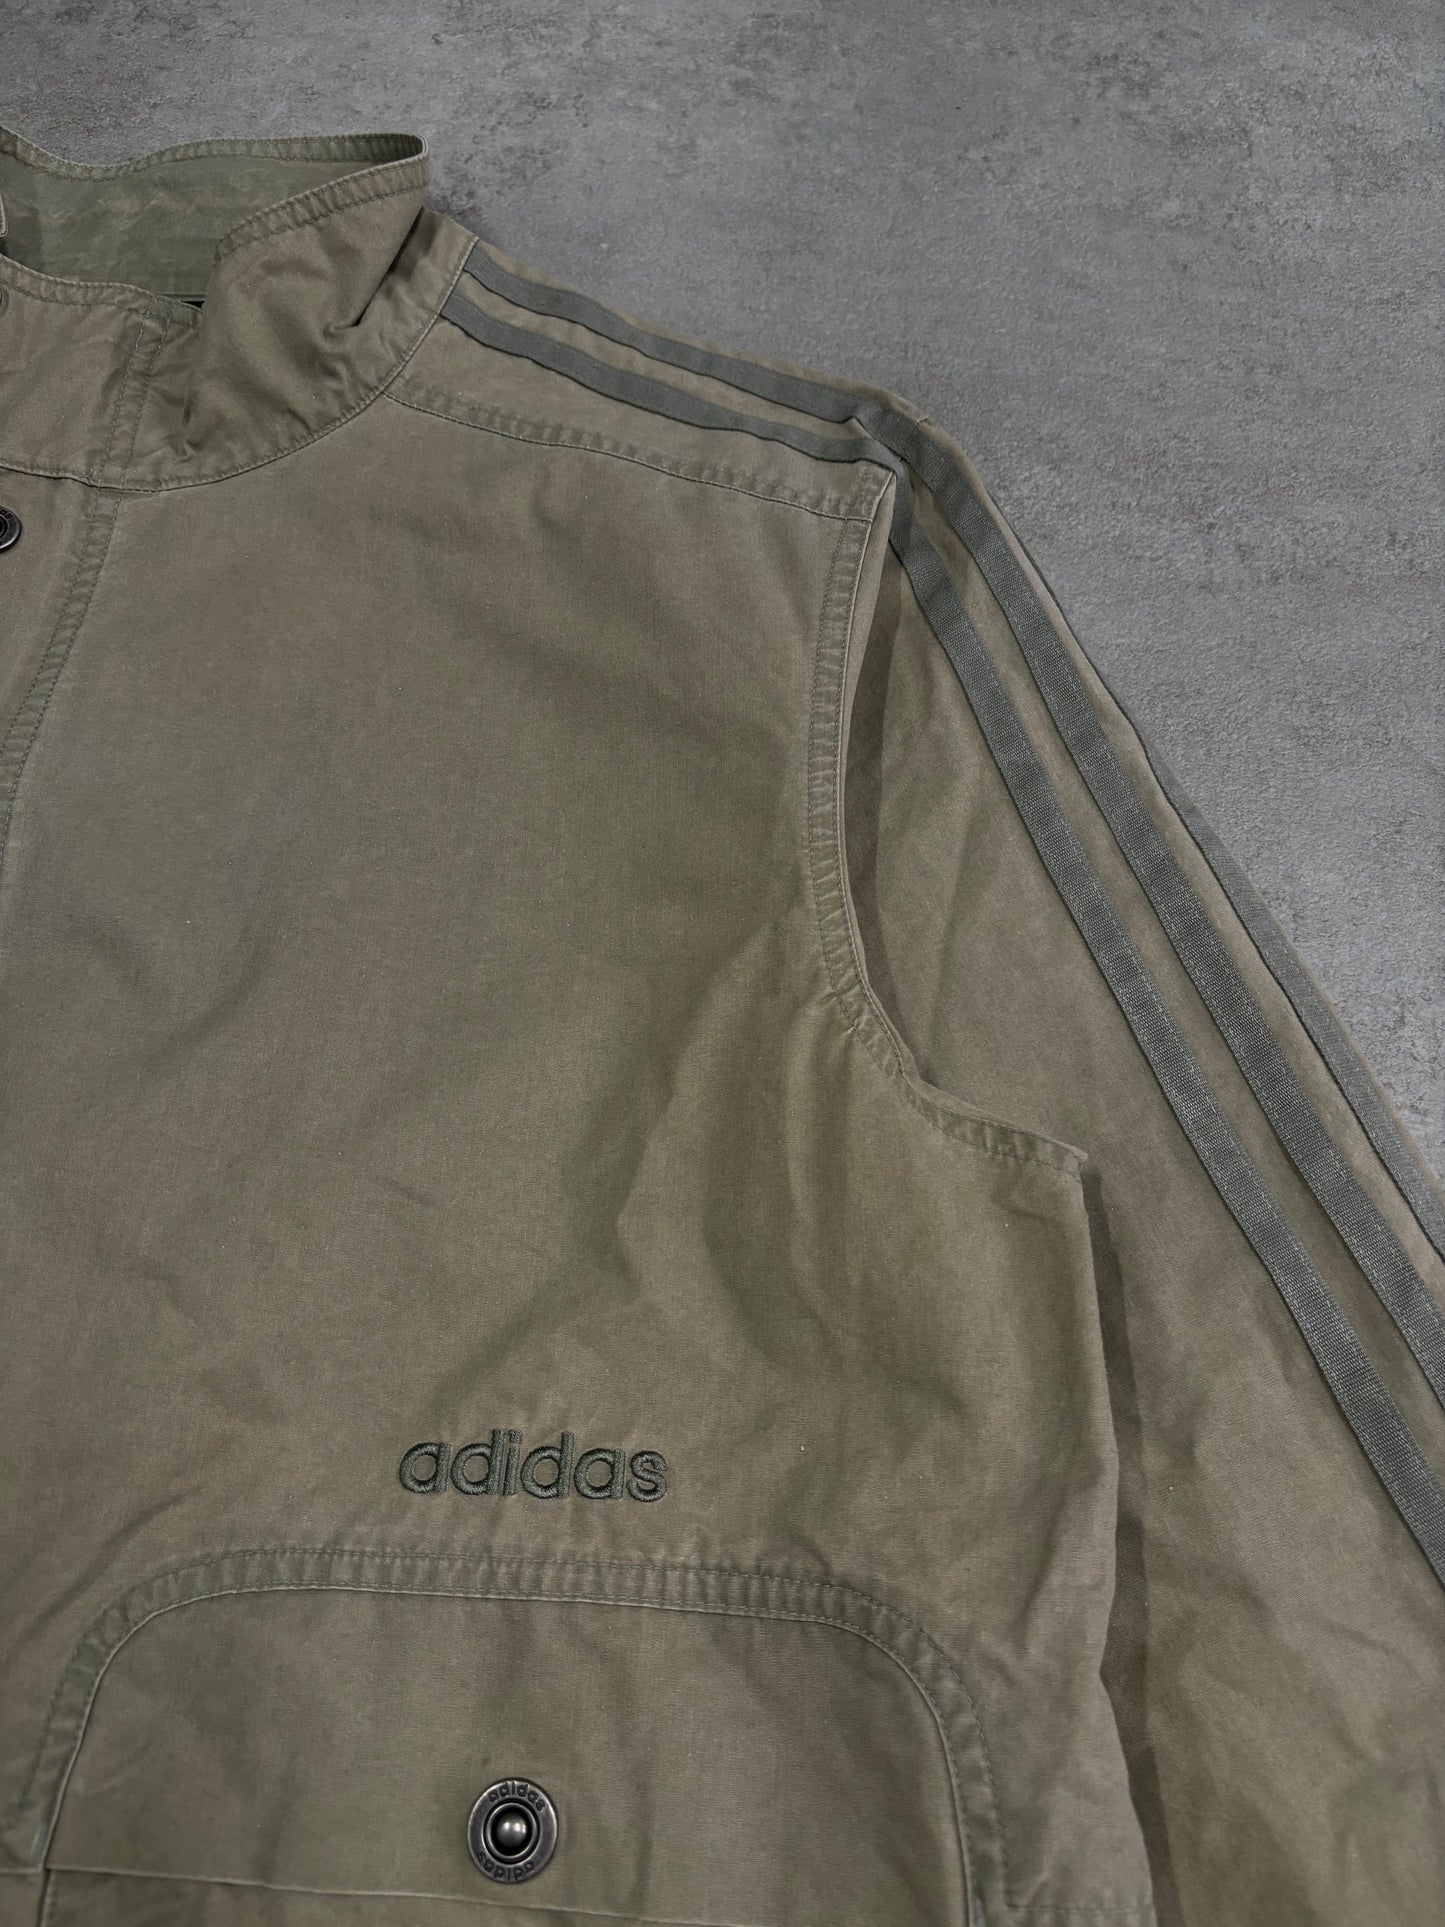 Adidas 2005 Vintage Cargo Jacket - M